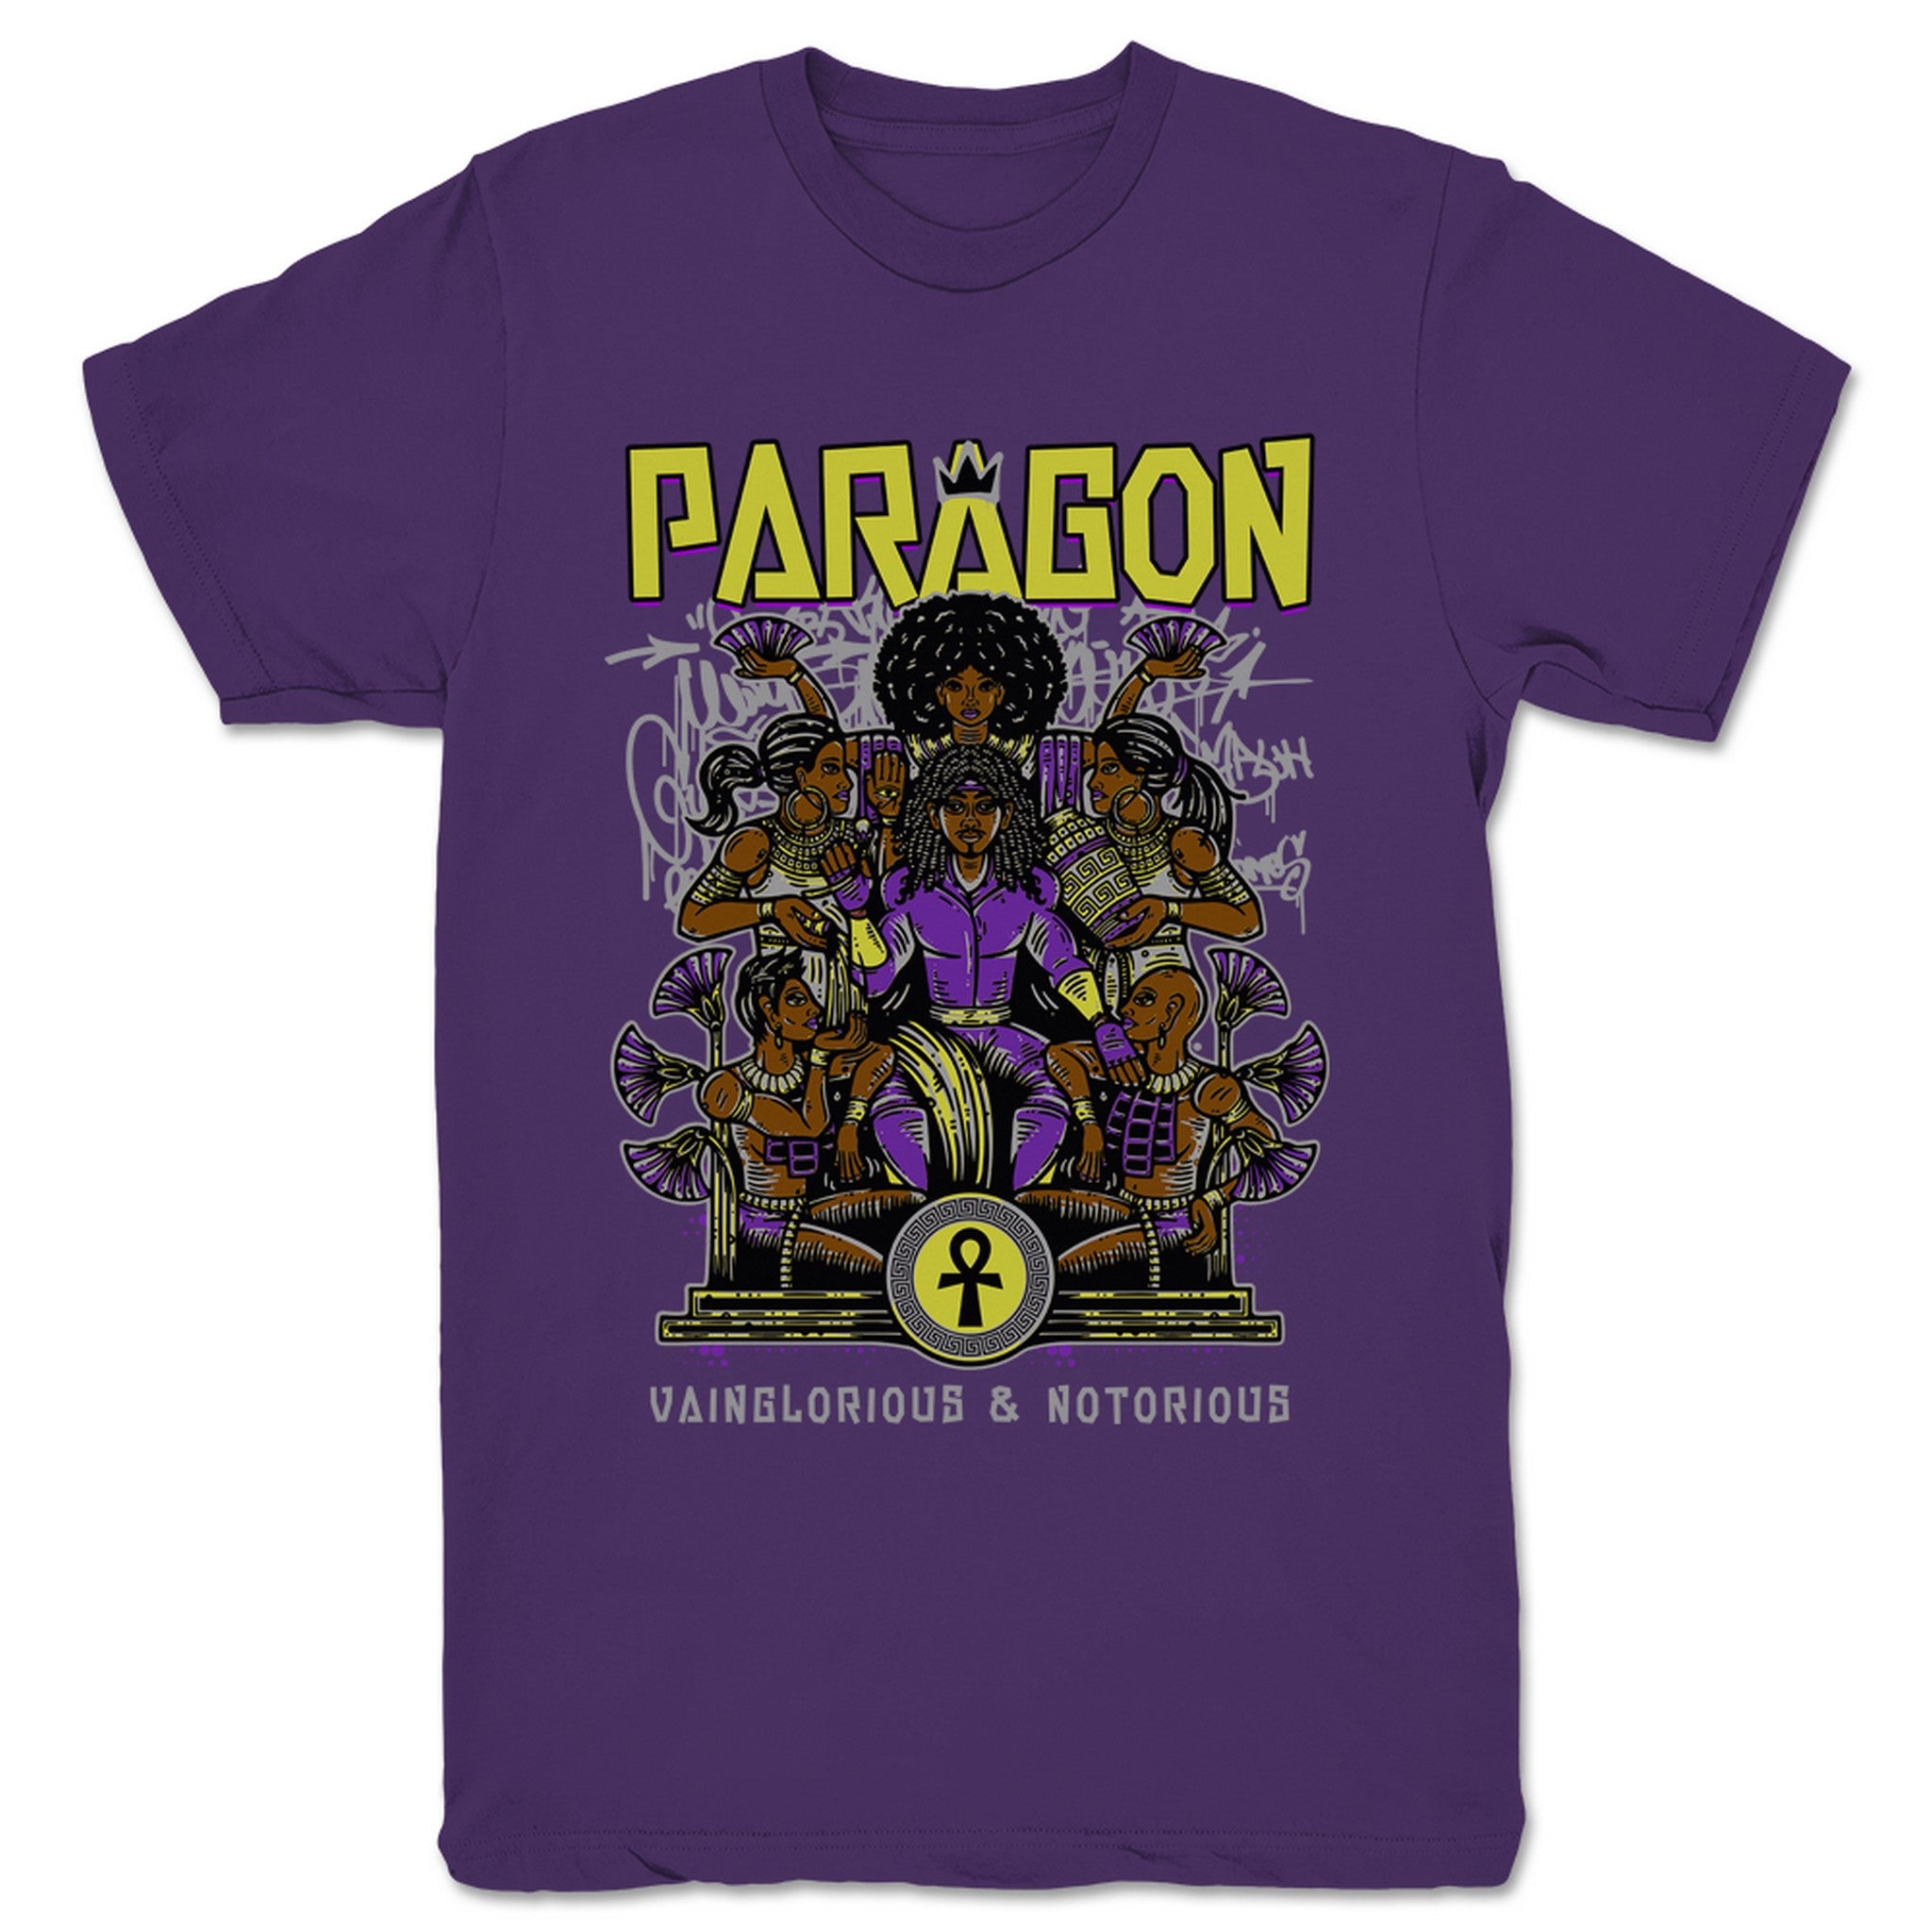 Paragon - Vainglorious & Notorious, Unisex Tee